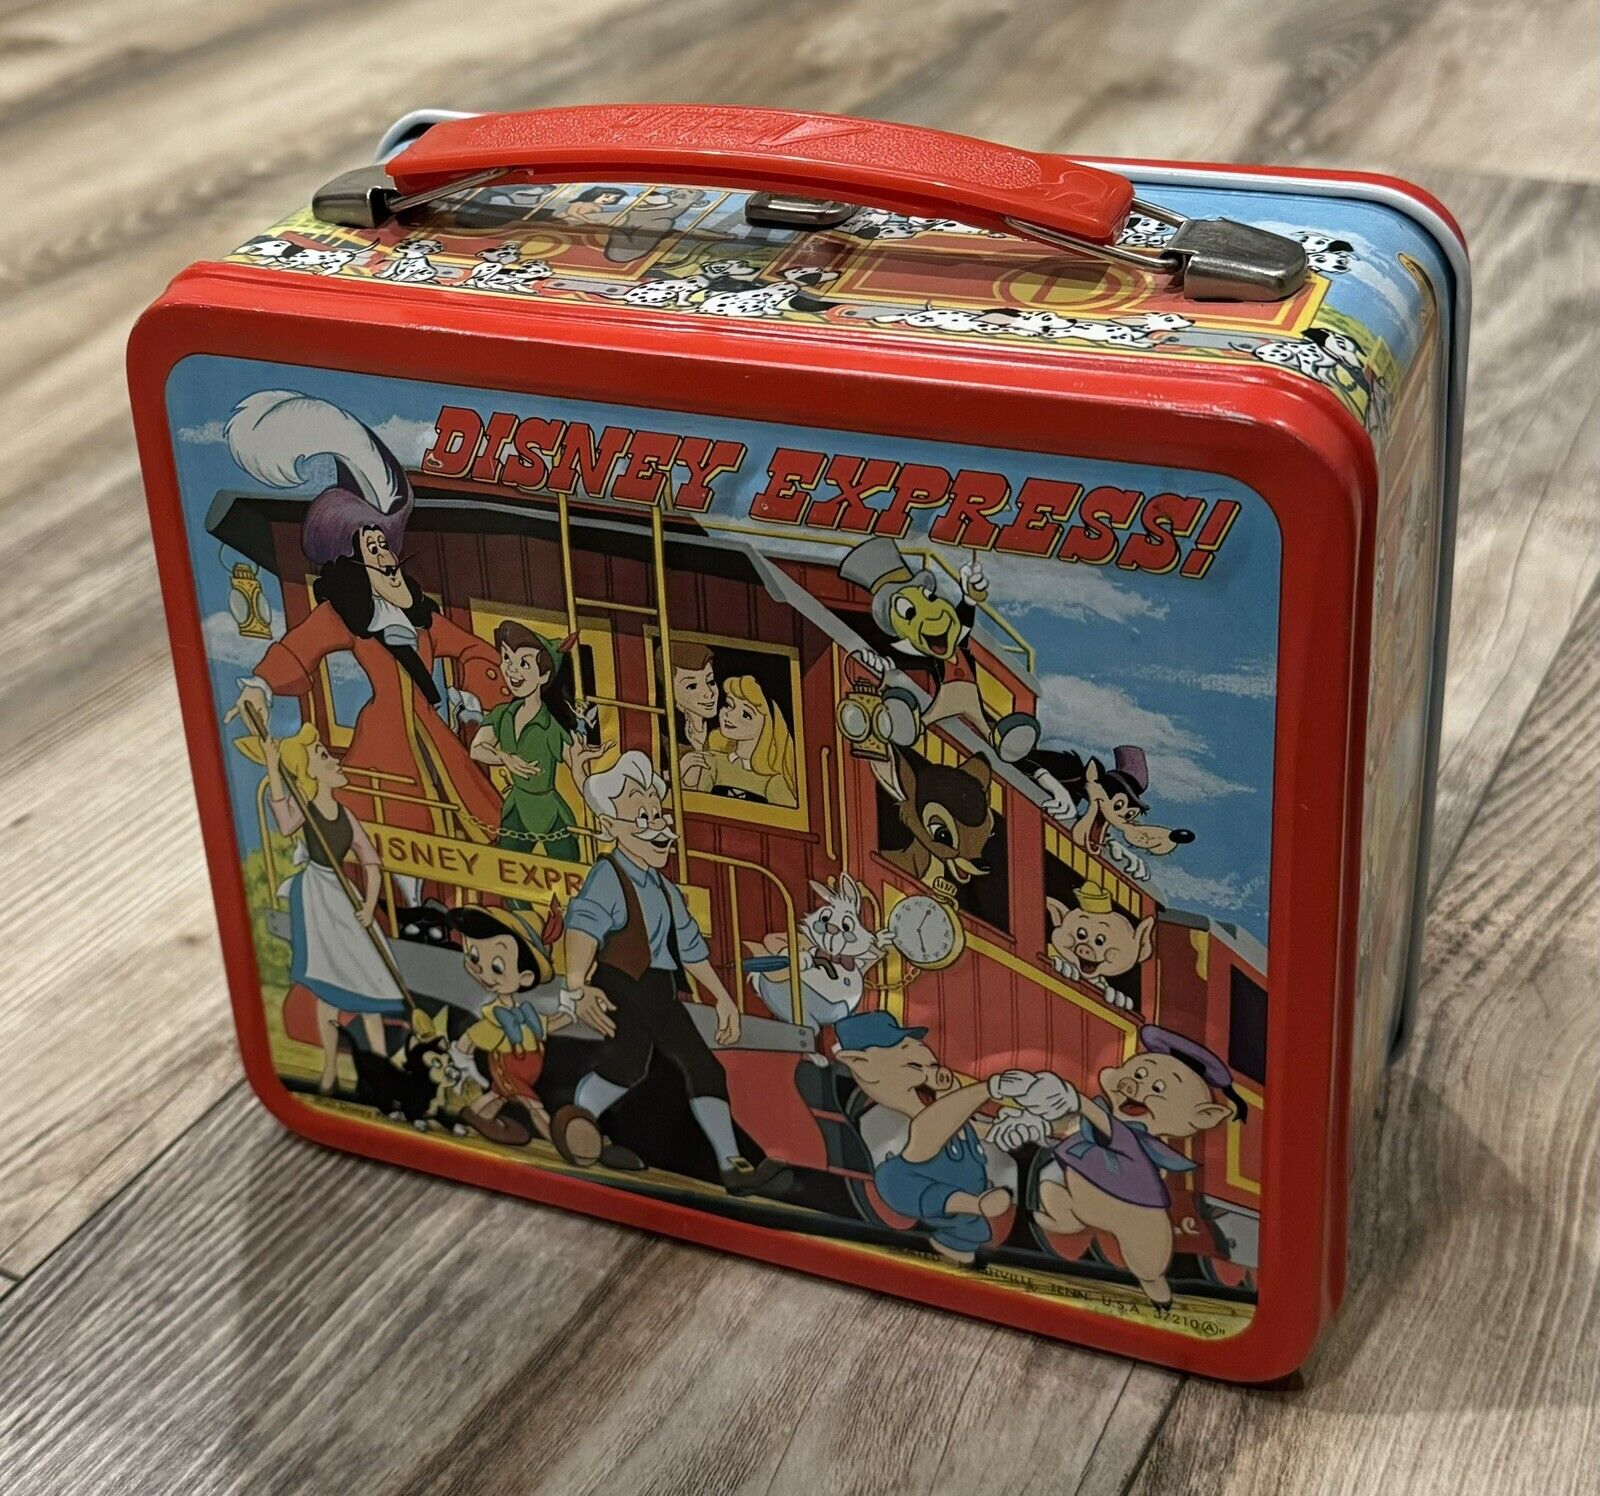 1979 VINTAGE Disney Express ALADDIN Lunch Box - “NO RUST” EXCELLENT CONDITION